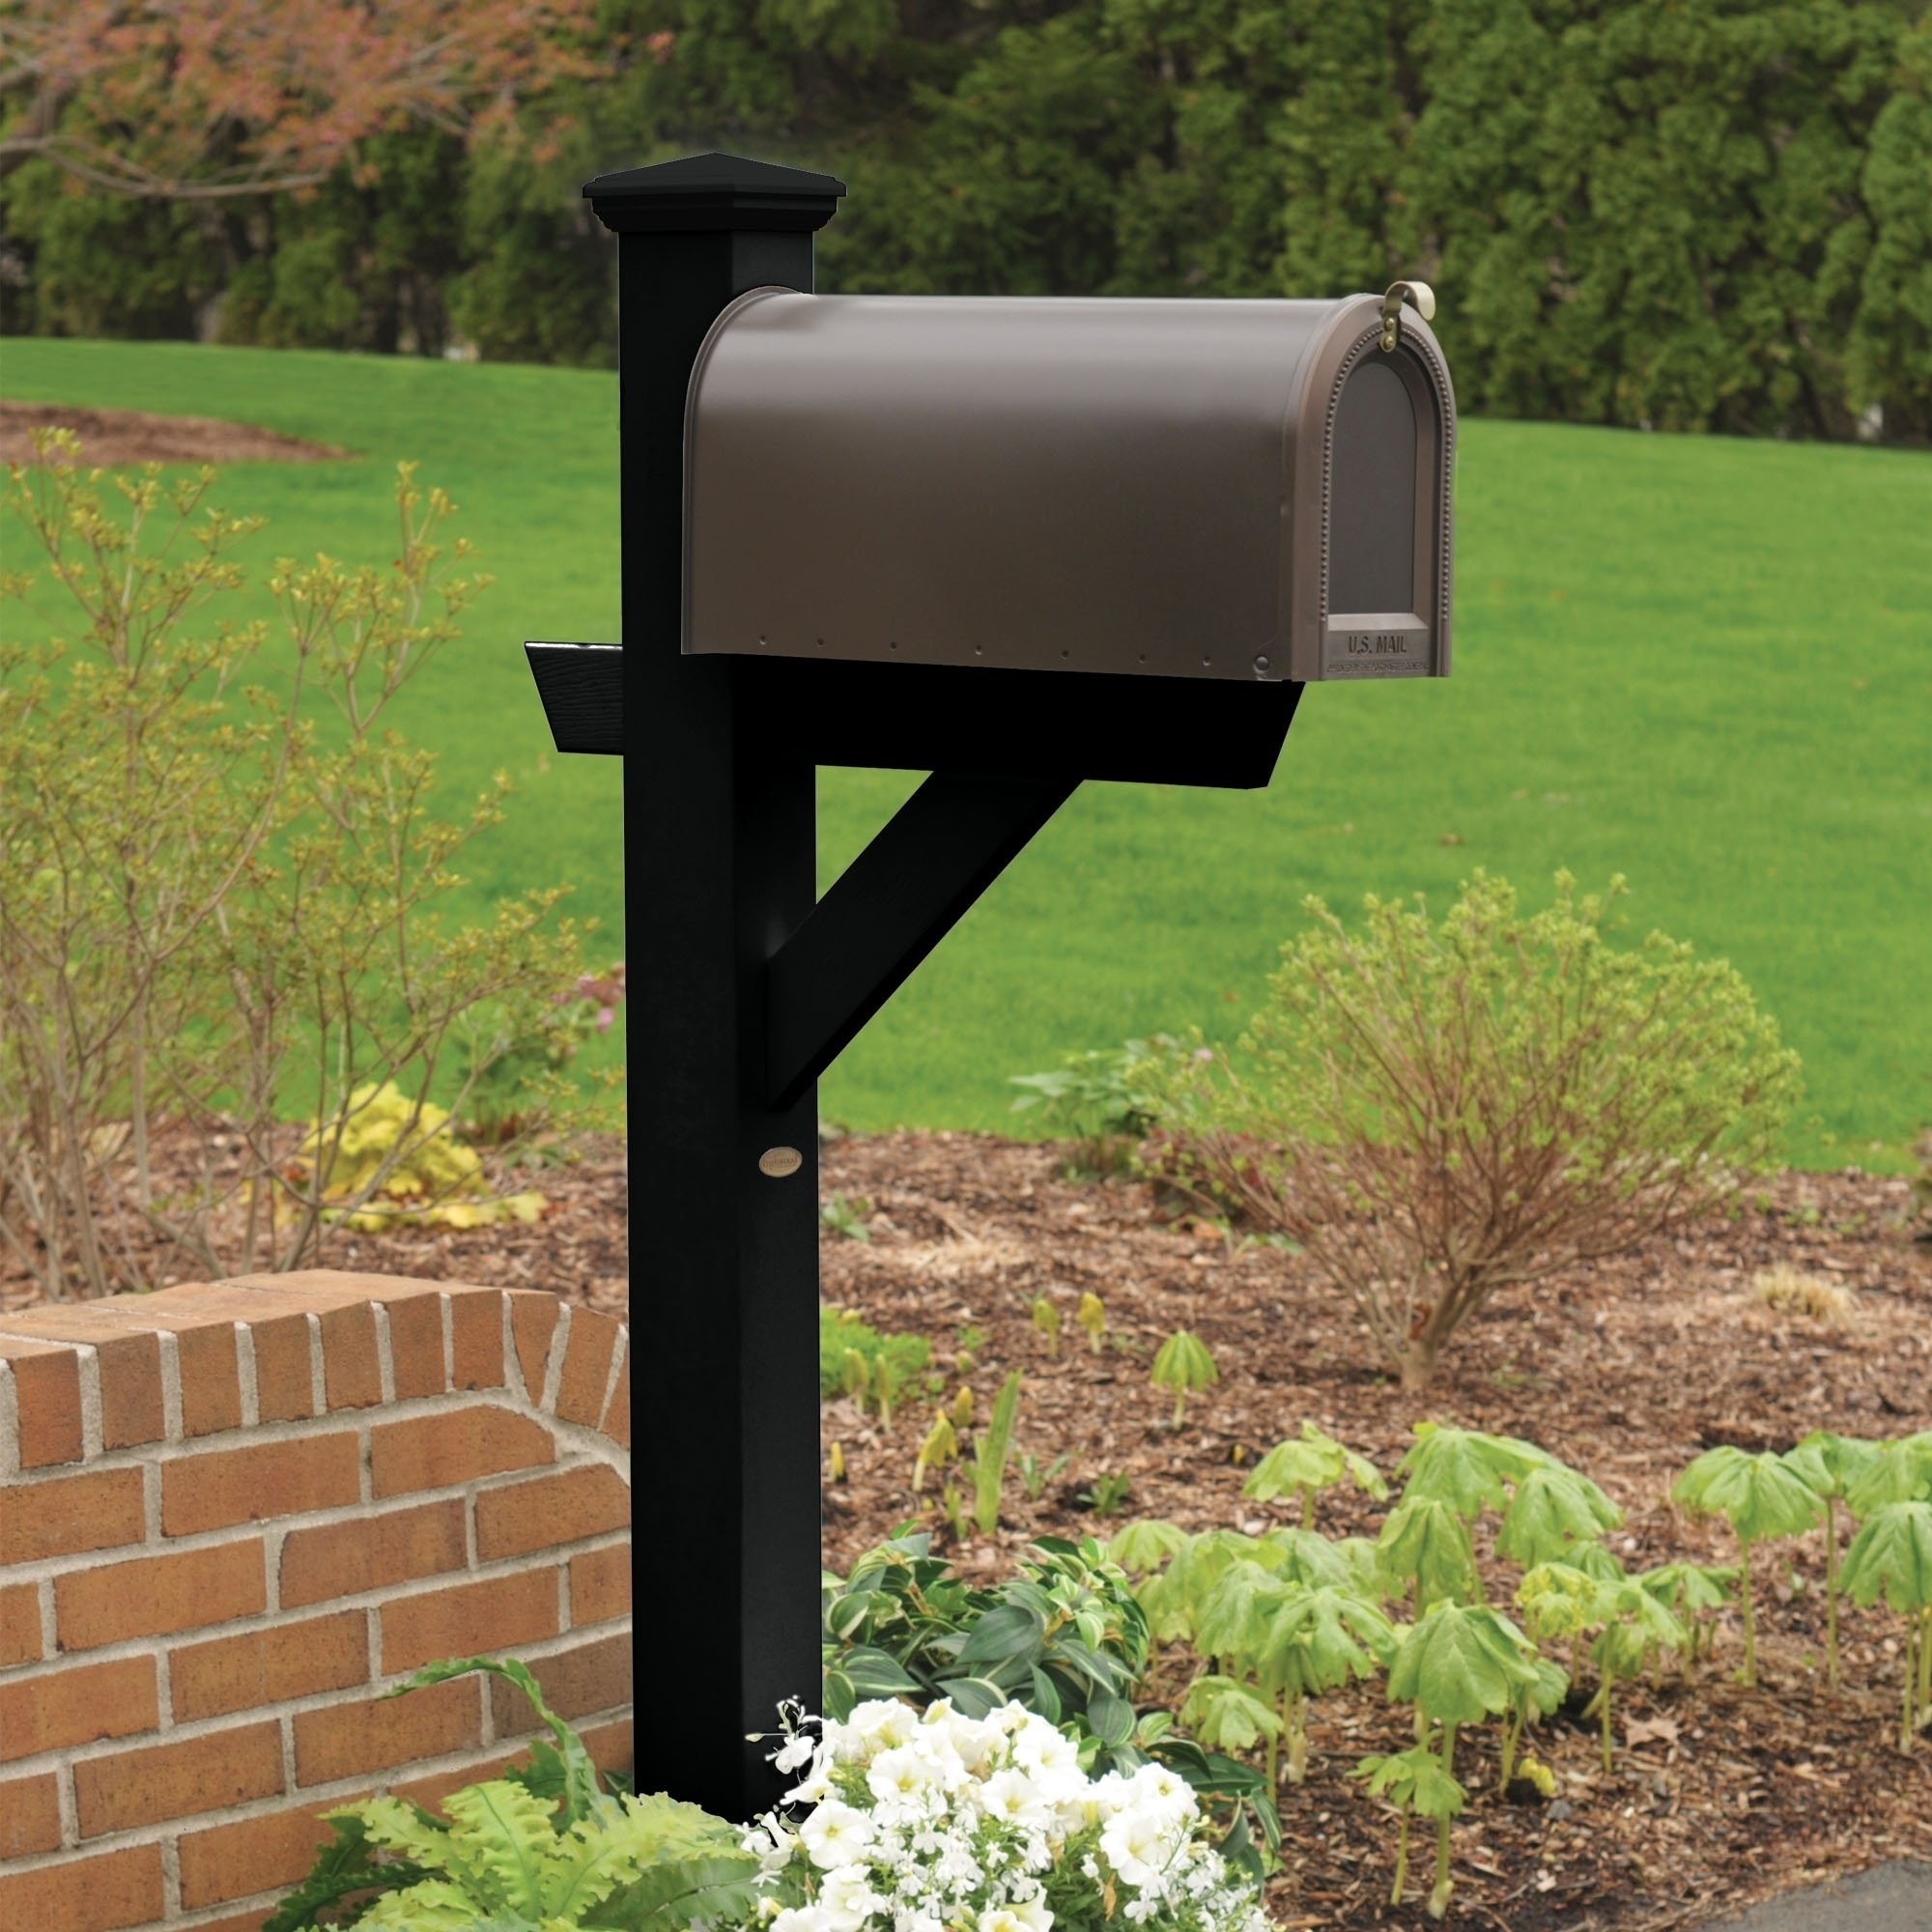 Mailbox Post Dimensions